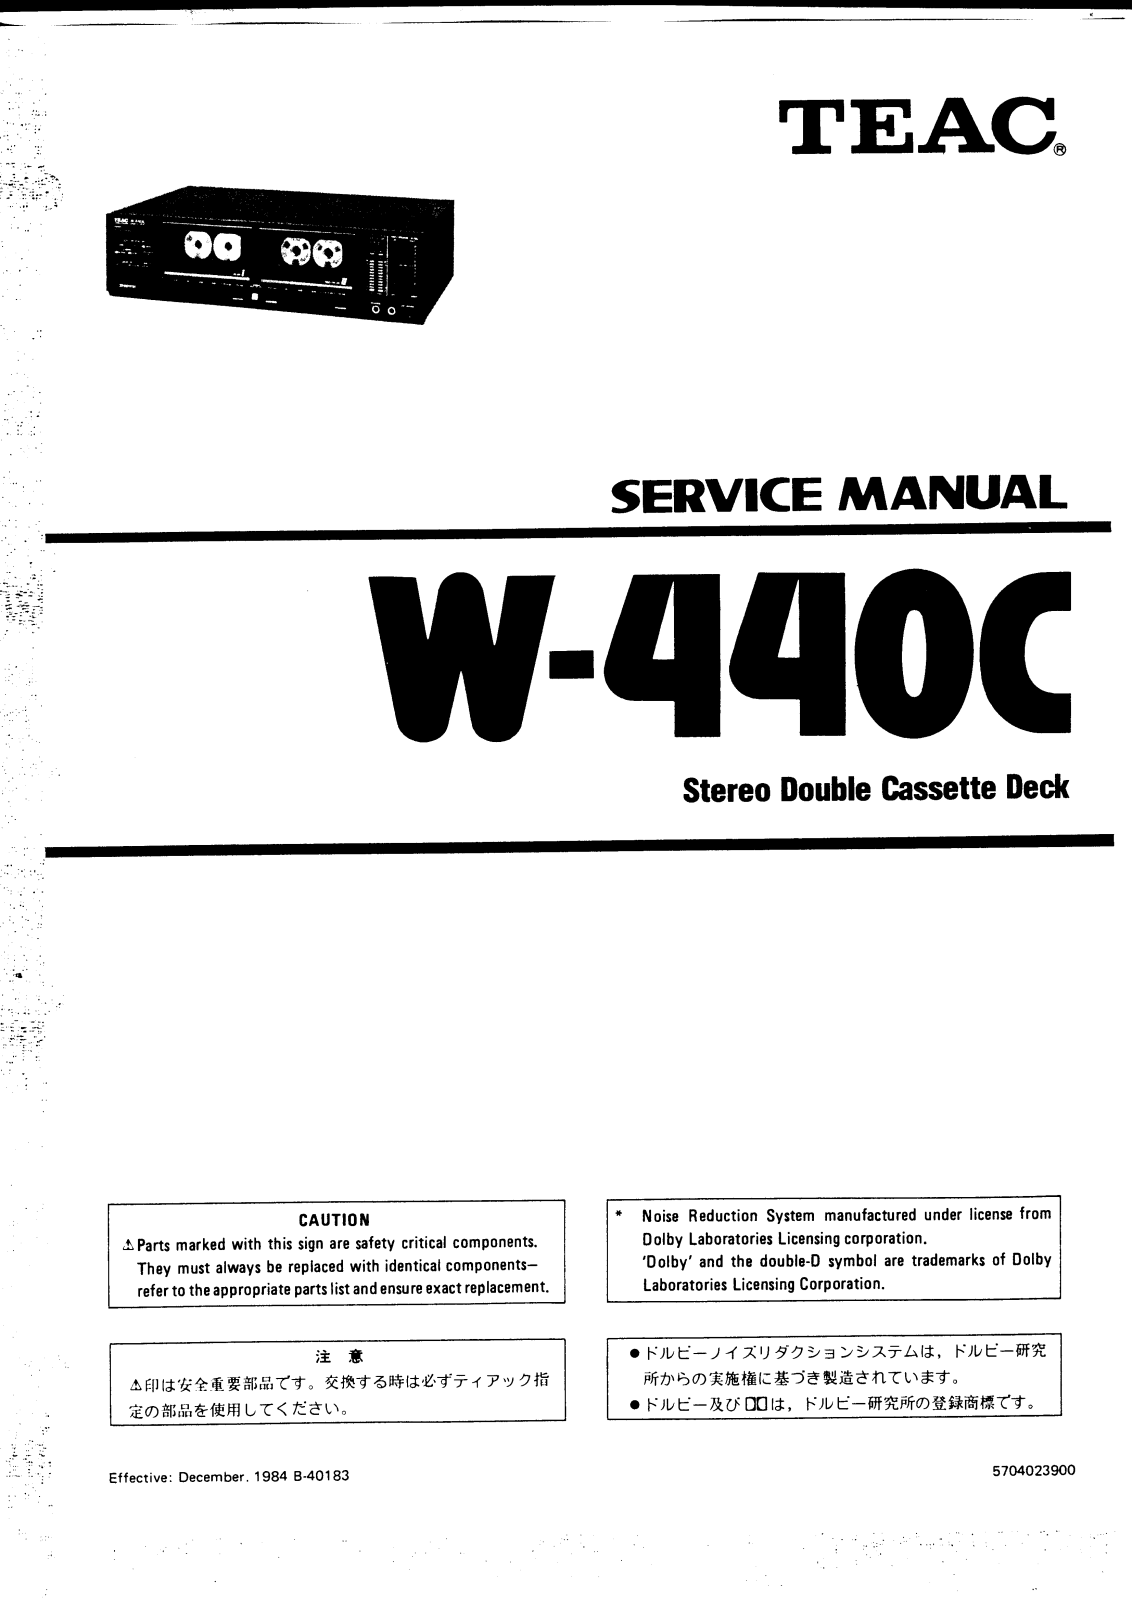 TEAC W-440-C Service manual